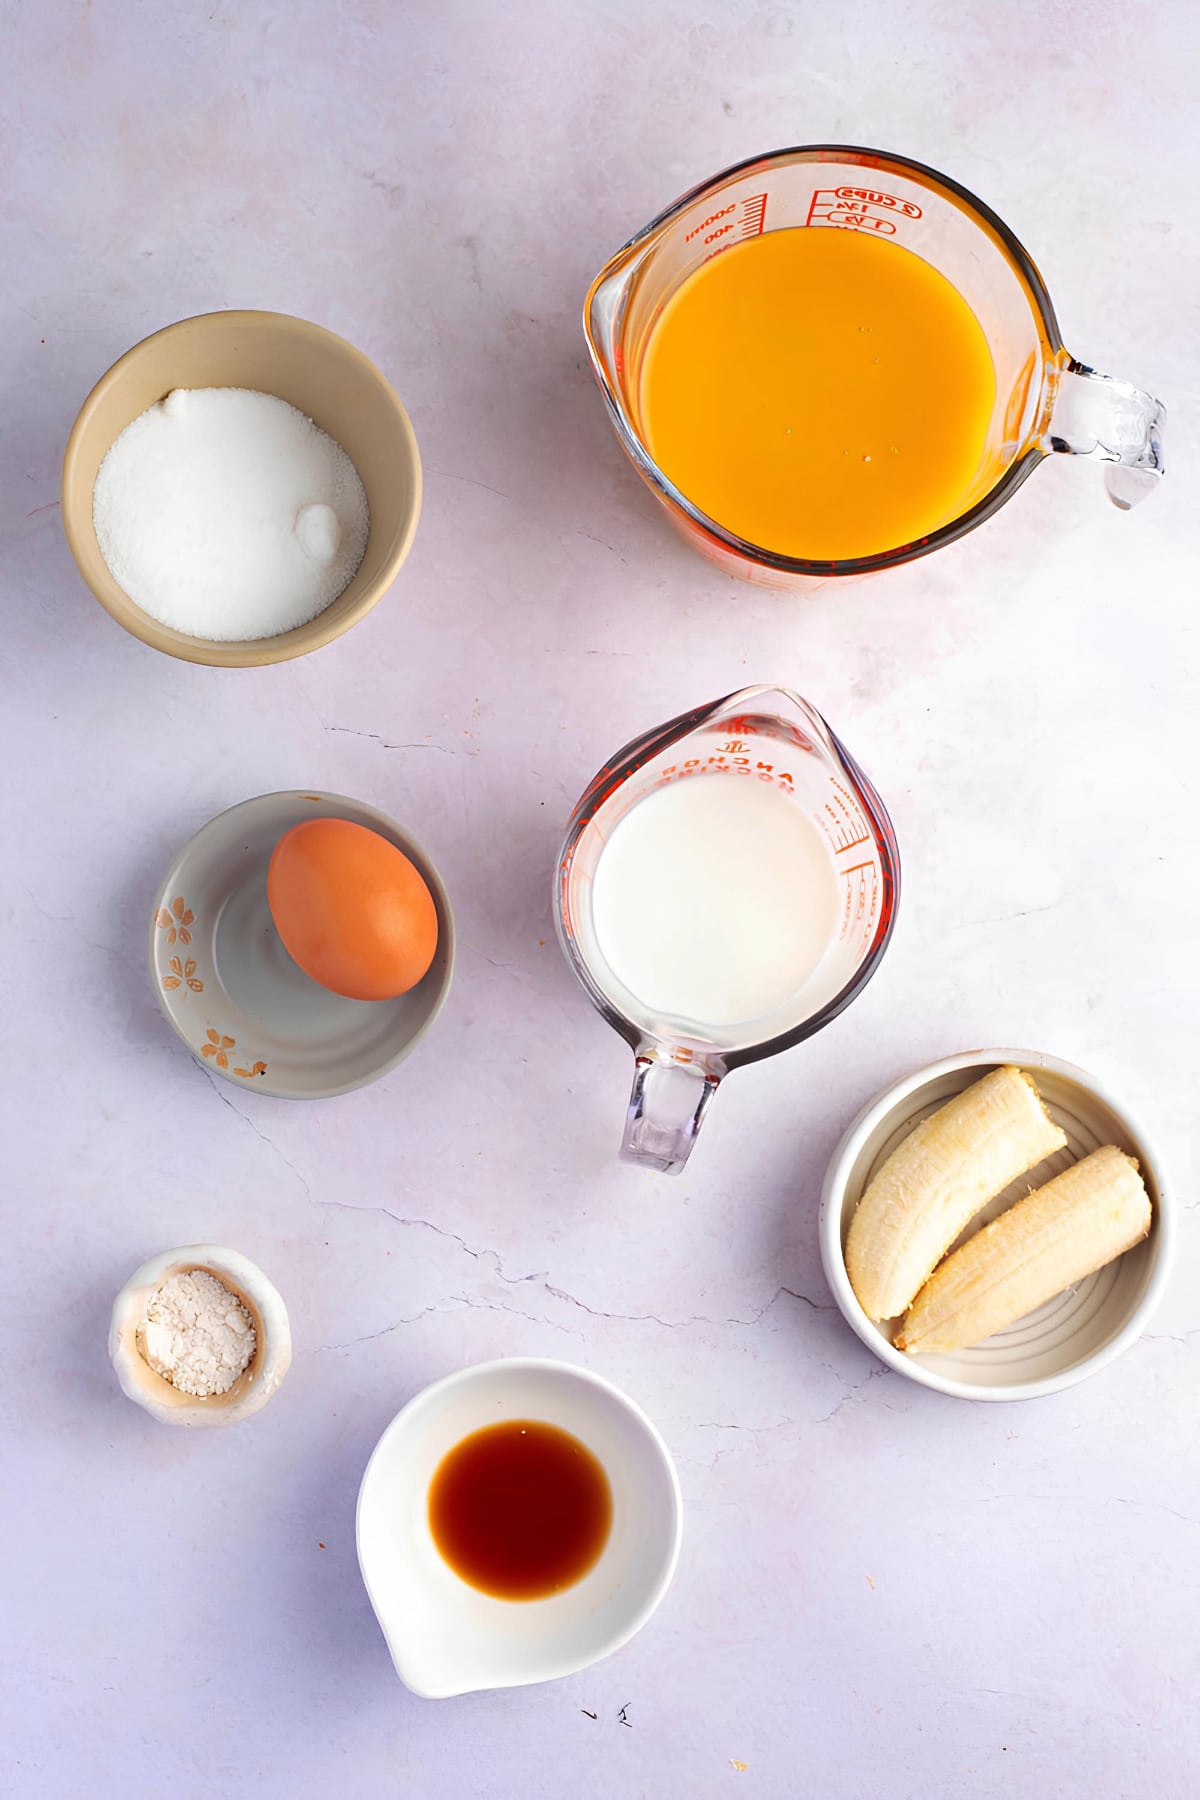 Orange Julius Ingredients - Ice Cubes, Orange Juice Concentrate, Milk, Whipping Cream, Banana, Sugar, Eggs, Powdered Dairy Creamer, Vanilla Extract